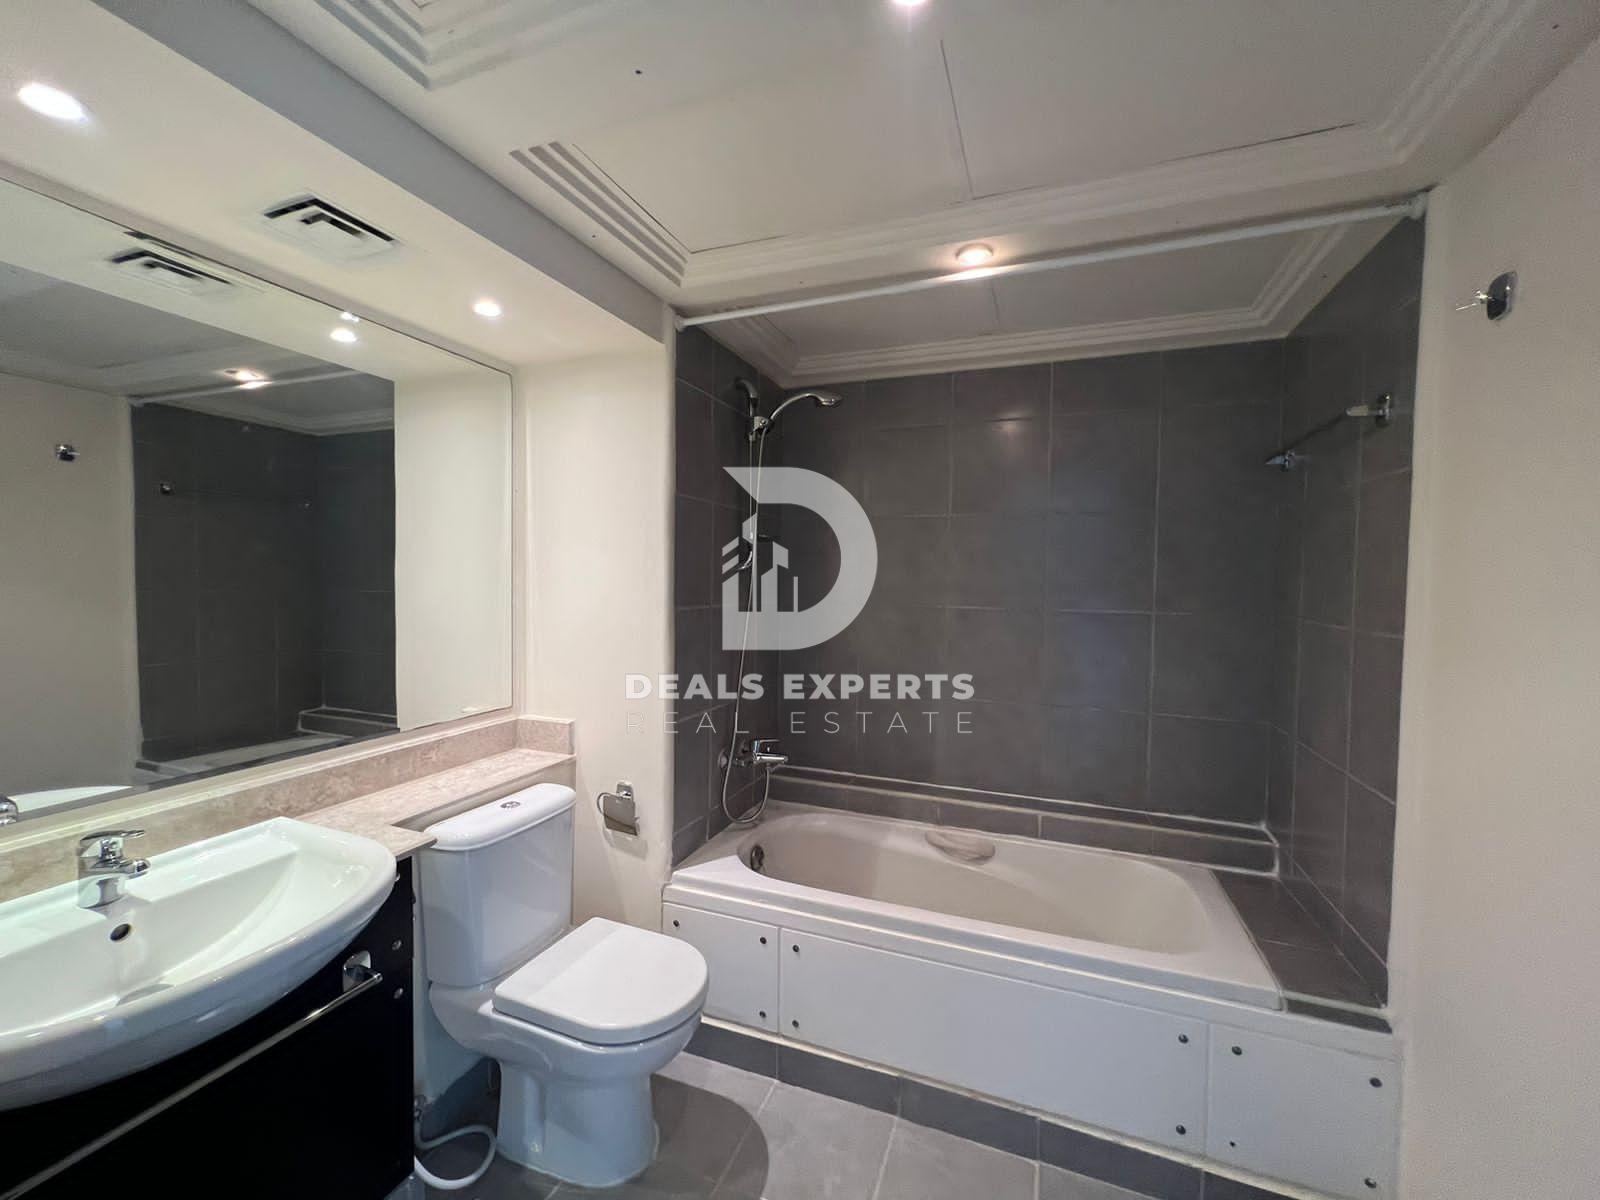 2 bed, 3 bath Villa for sale in Contemporary Style, Al Reef Villas, Al Reef, Abu Dhabi for price AED 1120000 